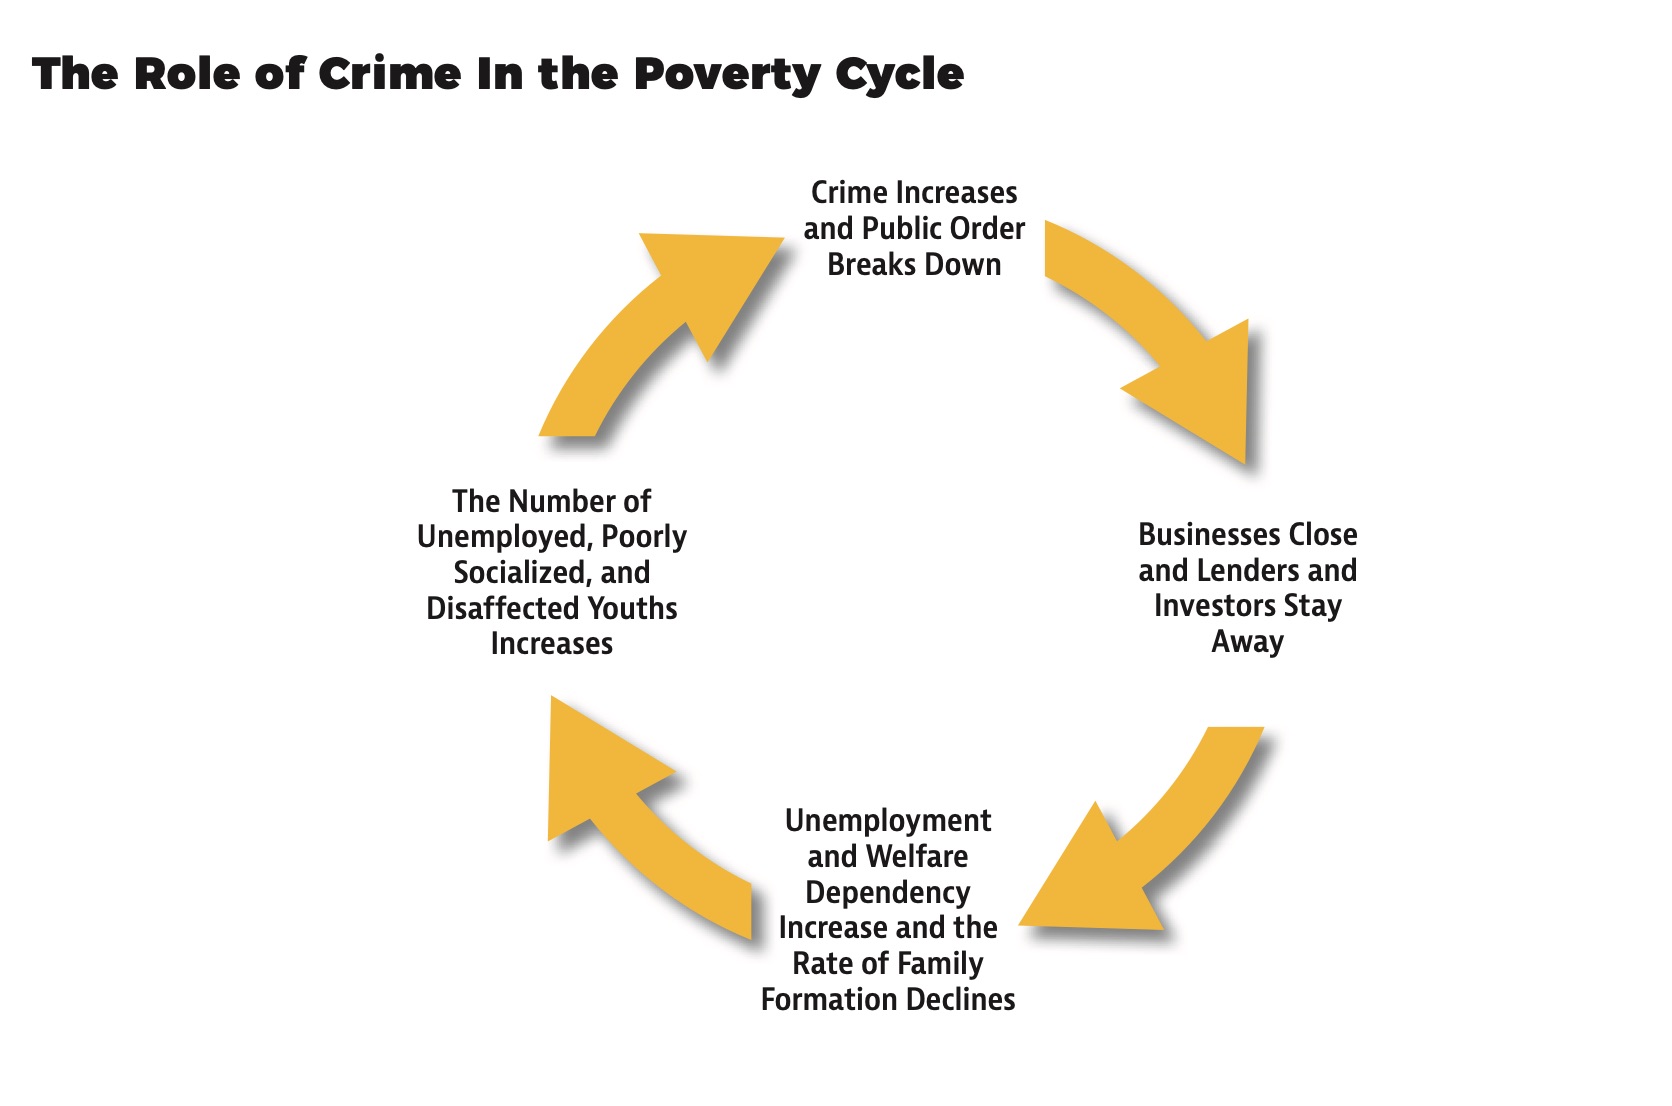 poverty breeds crime essay